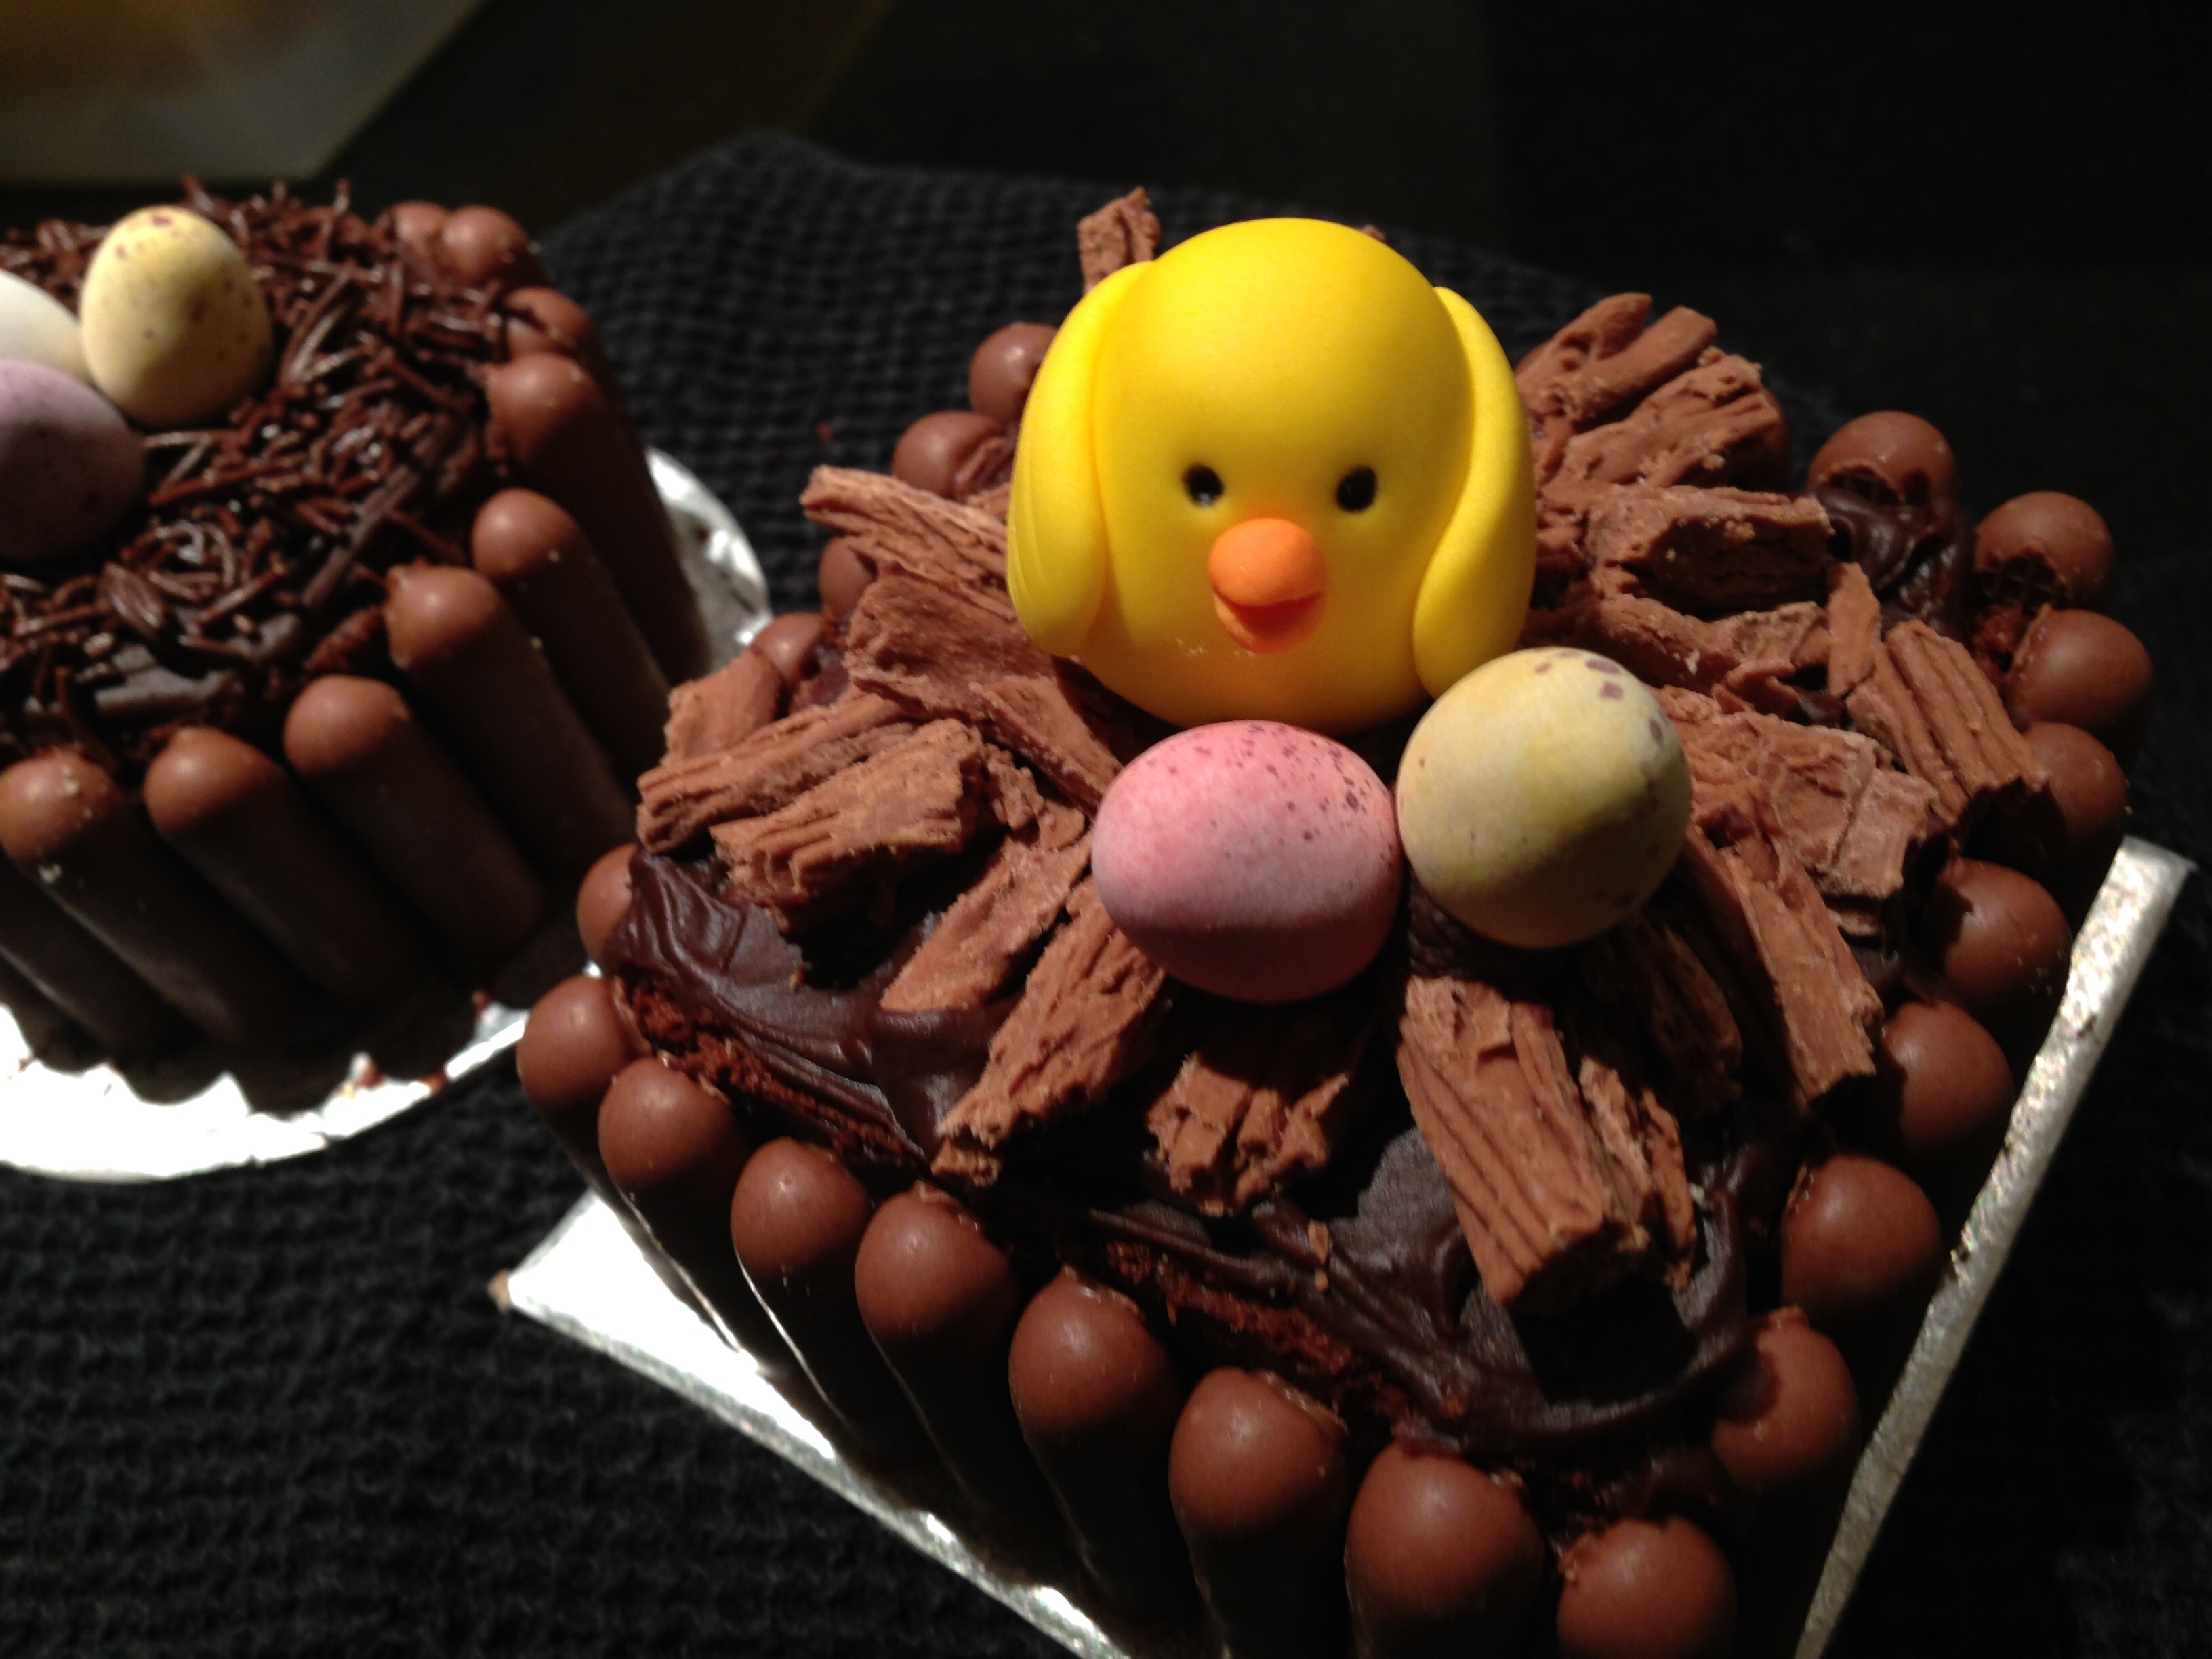 Mini Easter cakes